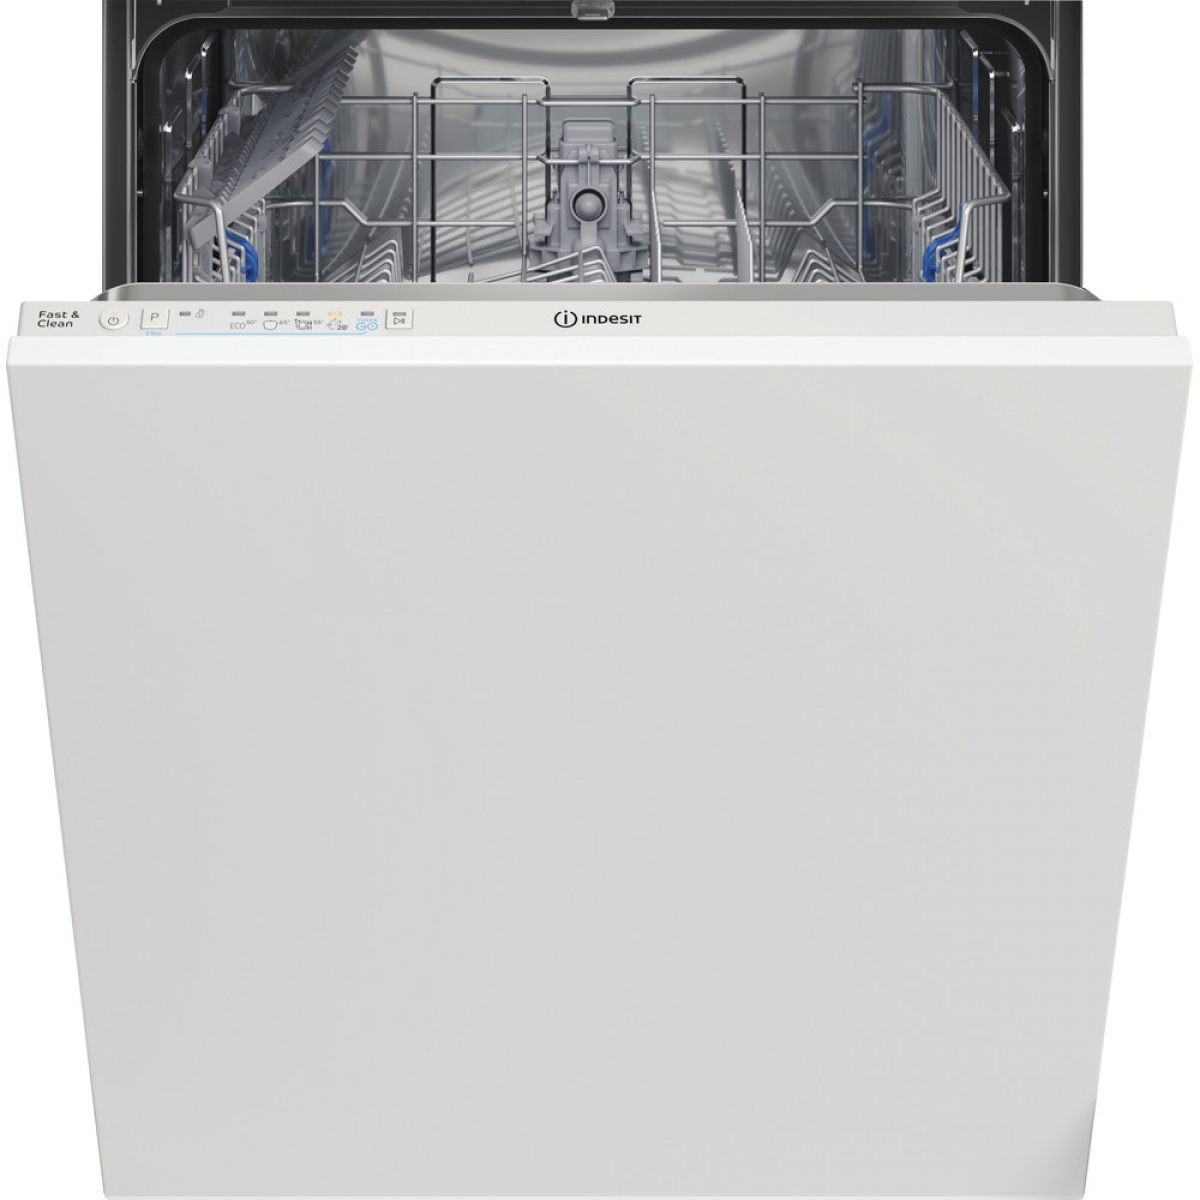 Máquina de lavar loiça de encastre Hotpoint HI 3010